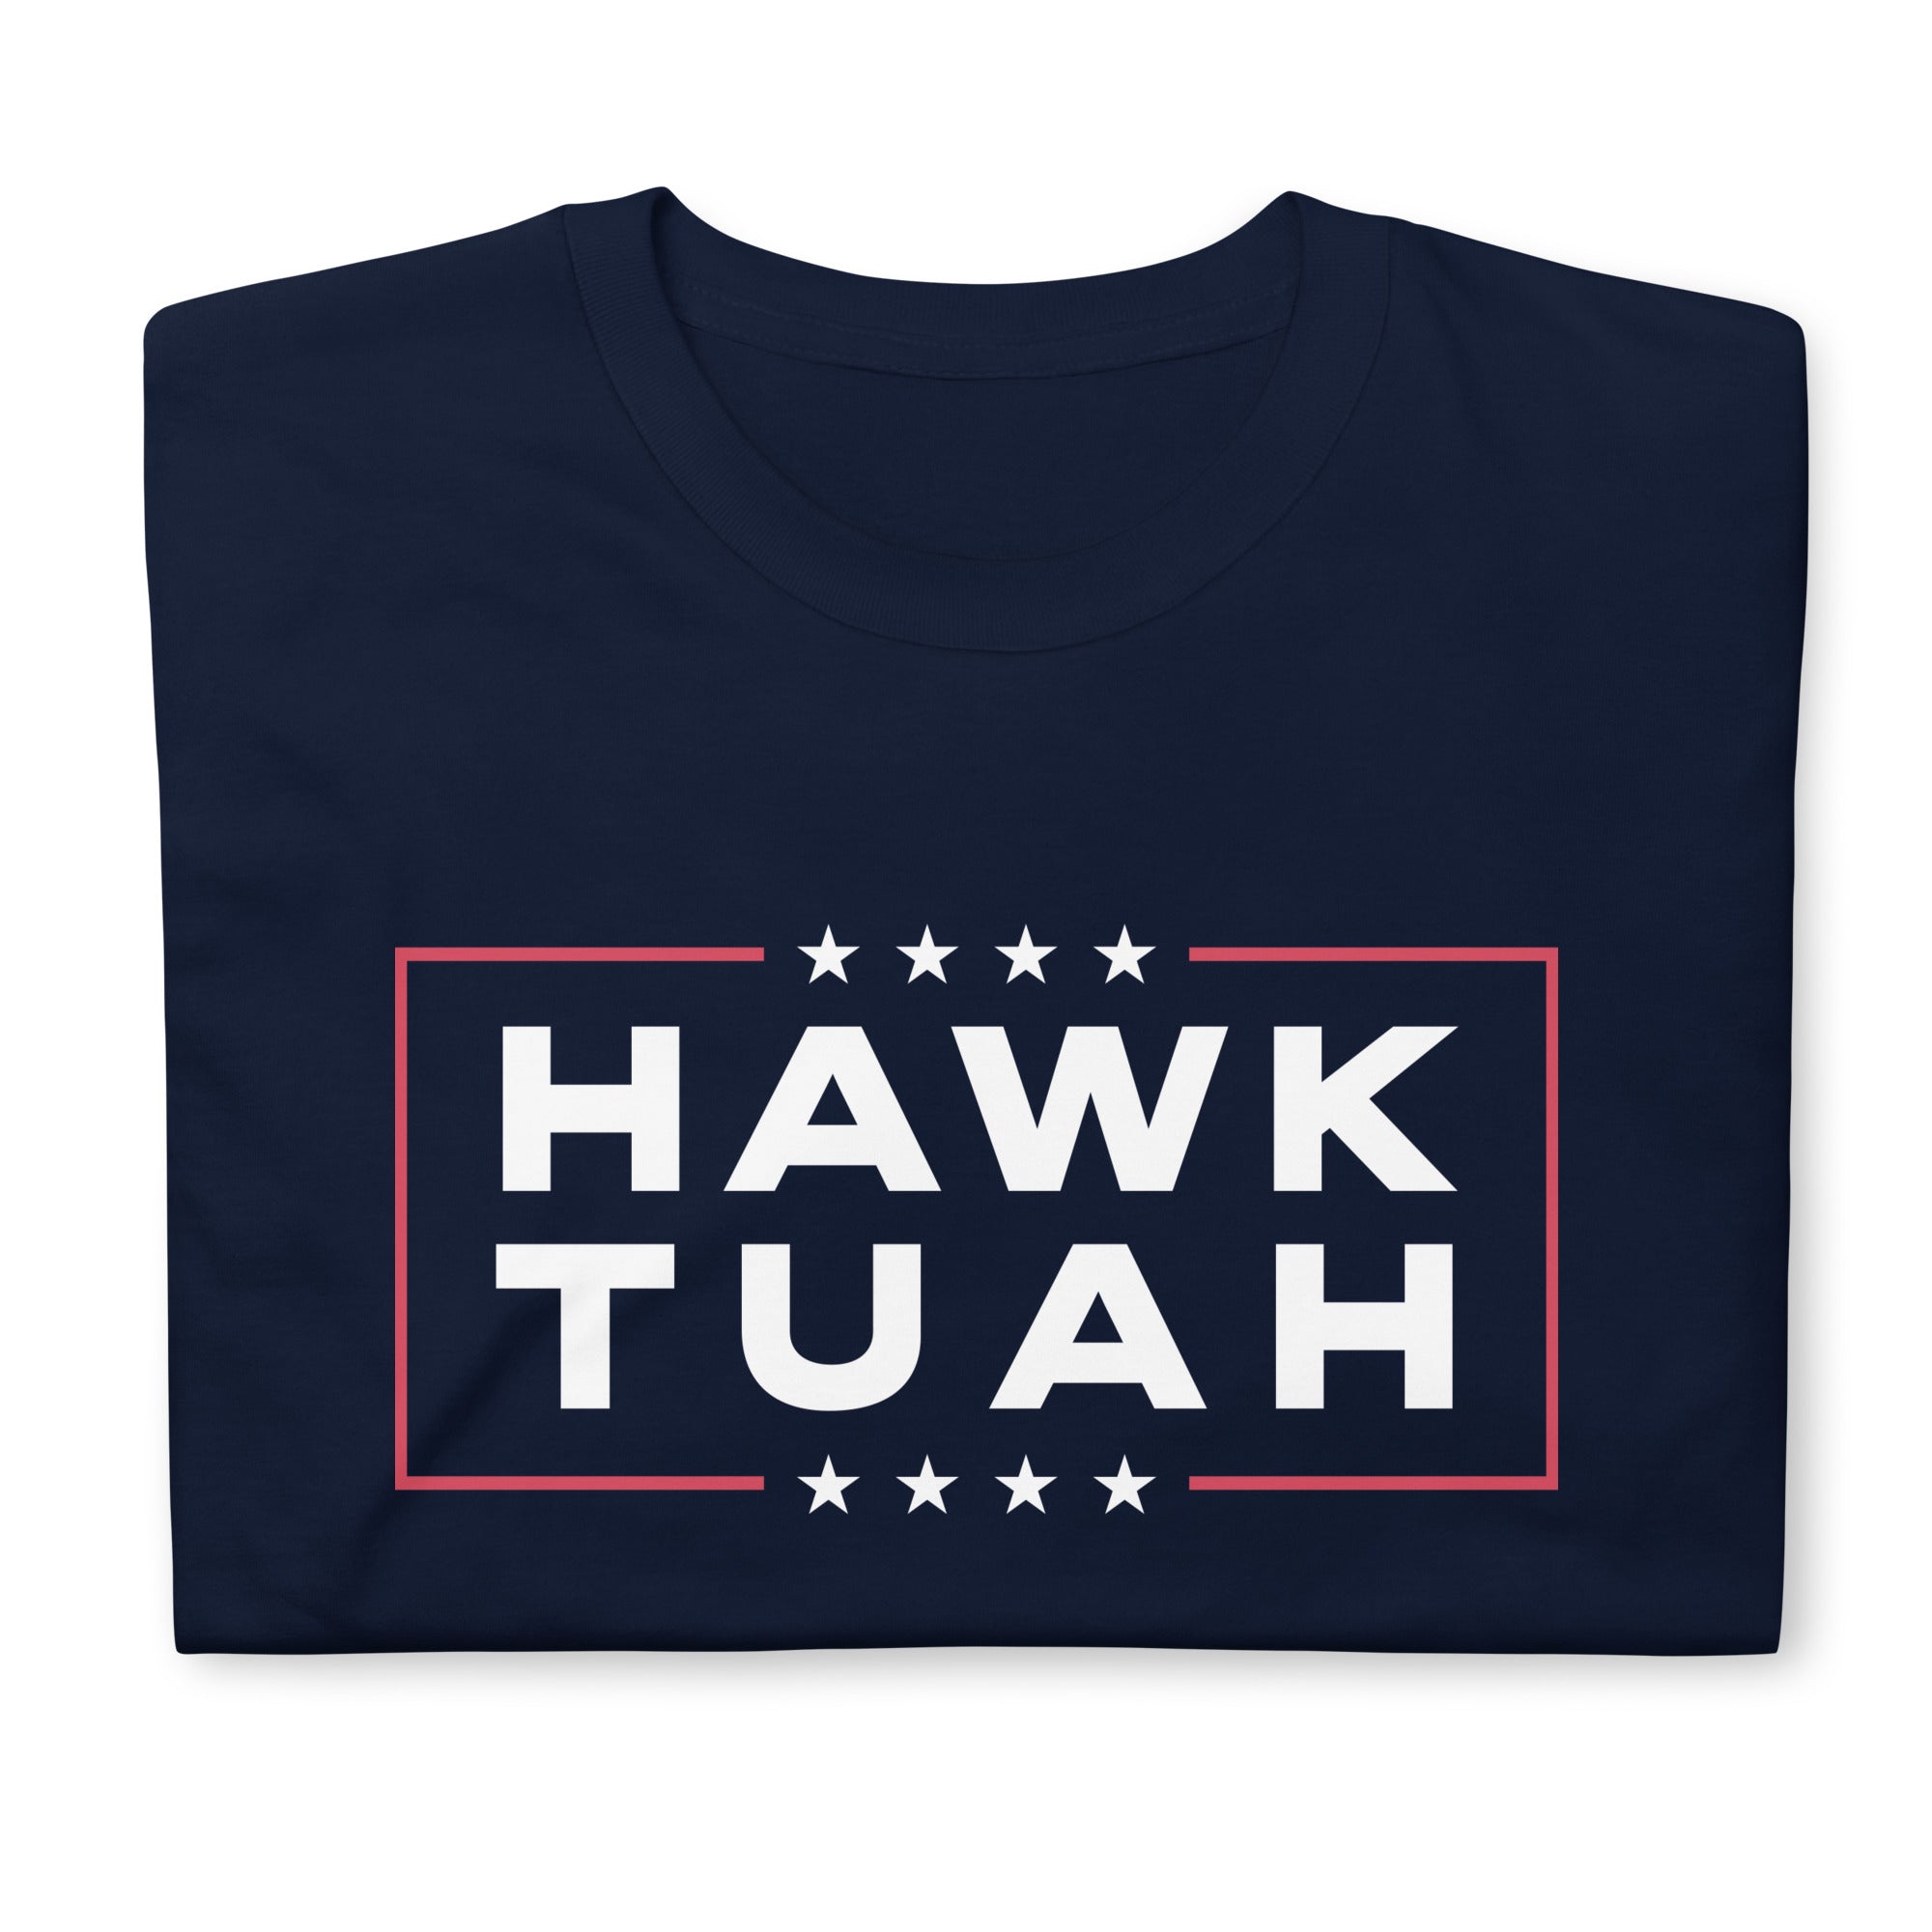 Hawk Tua Short-Sleeve Unisex T-Shirt